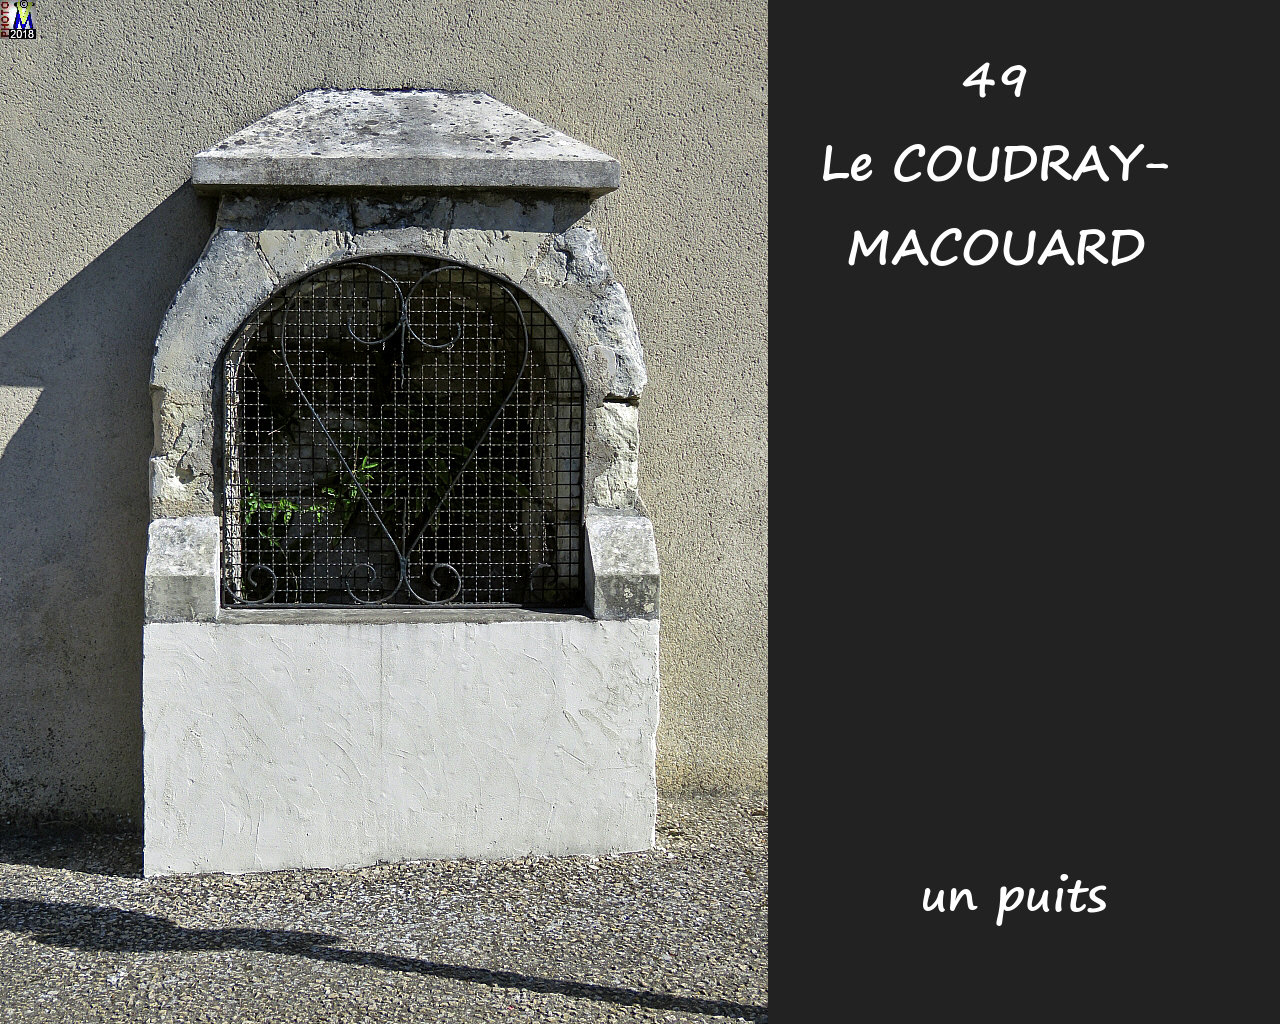 49COUDRAY-MACOUARD_puits_1002.jpg